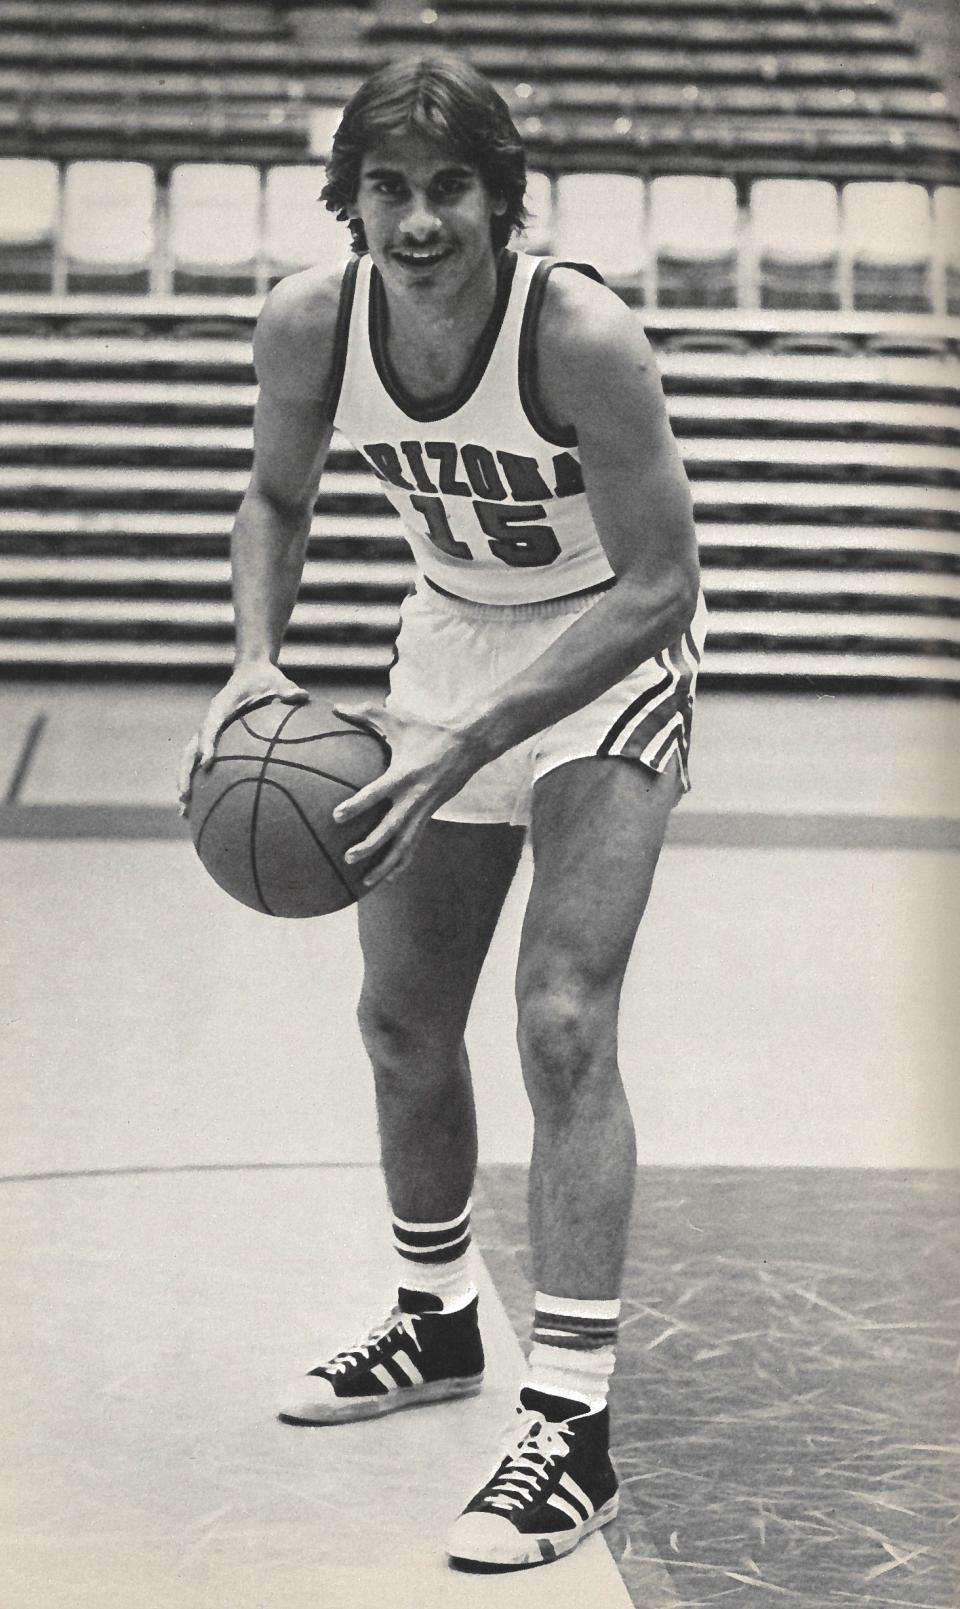 Jim Rappis of Waukesha had a massive NCAA Tournament showing for Arizona in 1976.